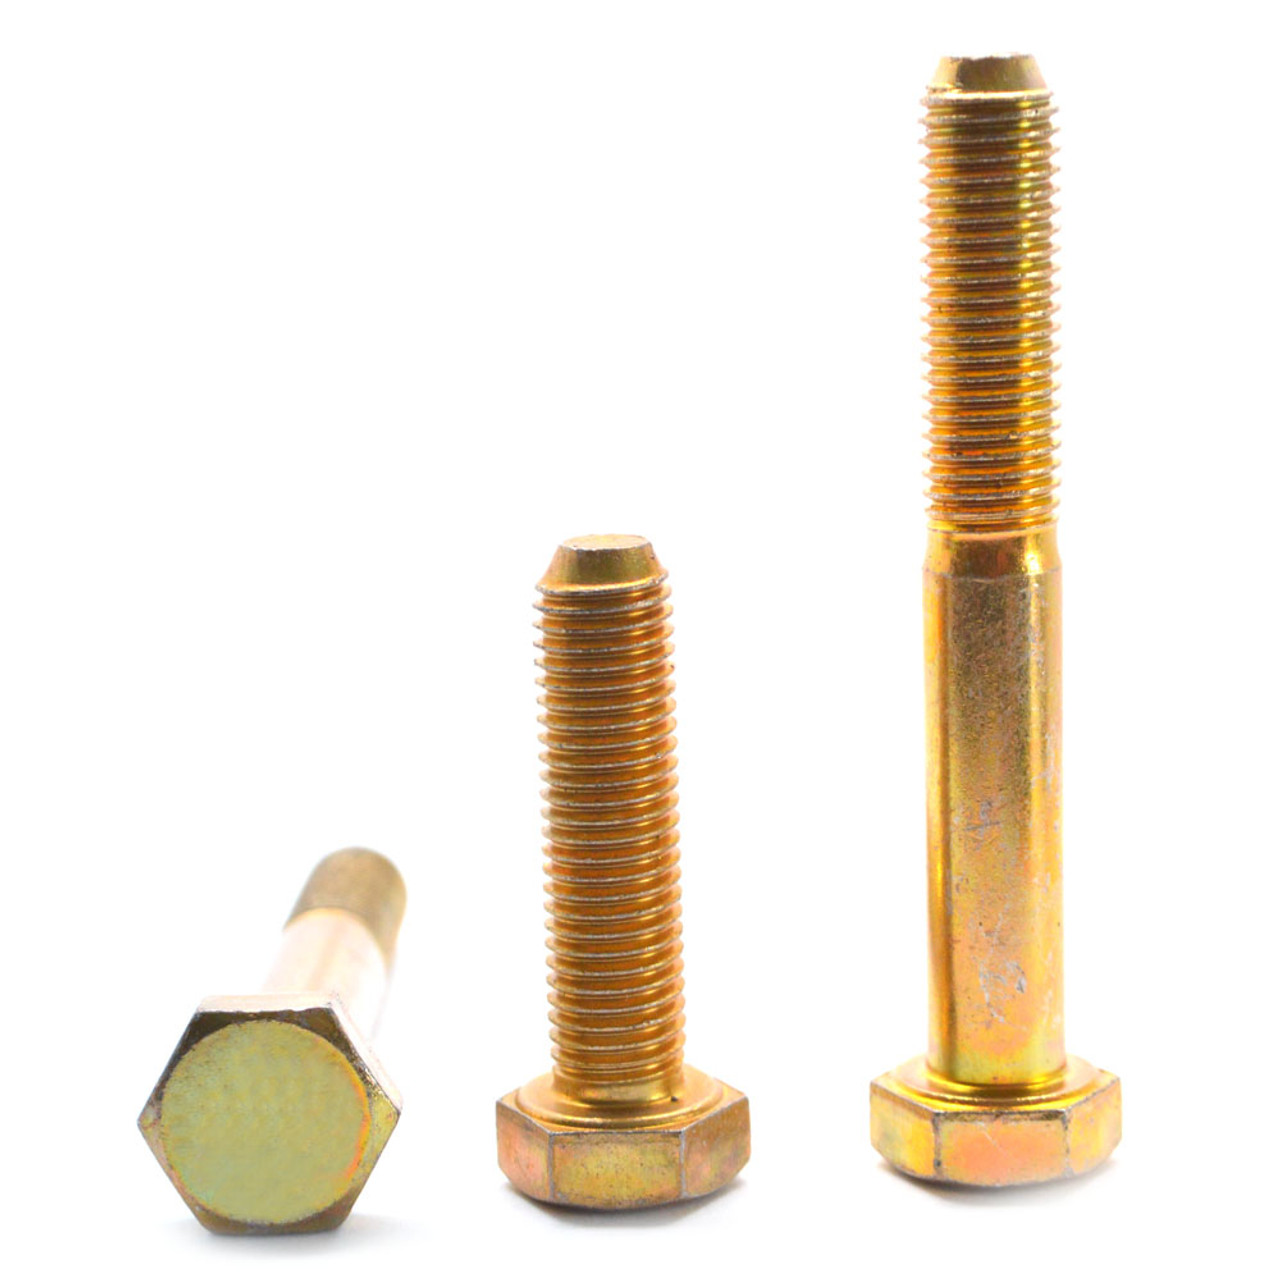 M10 x 1.50 x 65 MM Coarse Thread DIN 931 Class 8.8 Hex Cap Screw (Bolt) Medium Carbon Steel Yellow Zinc Plated